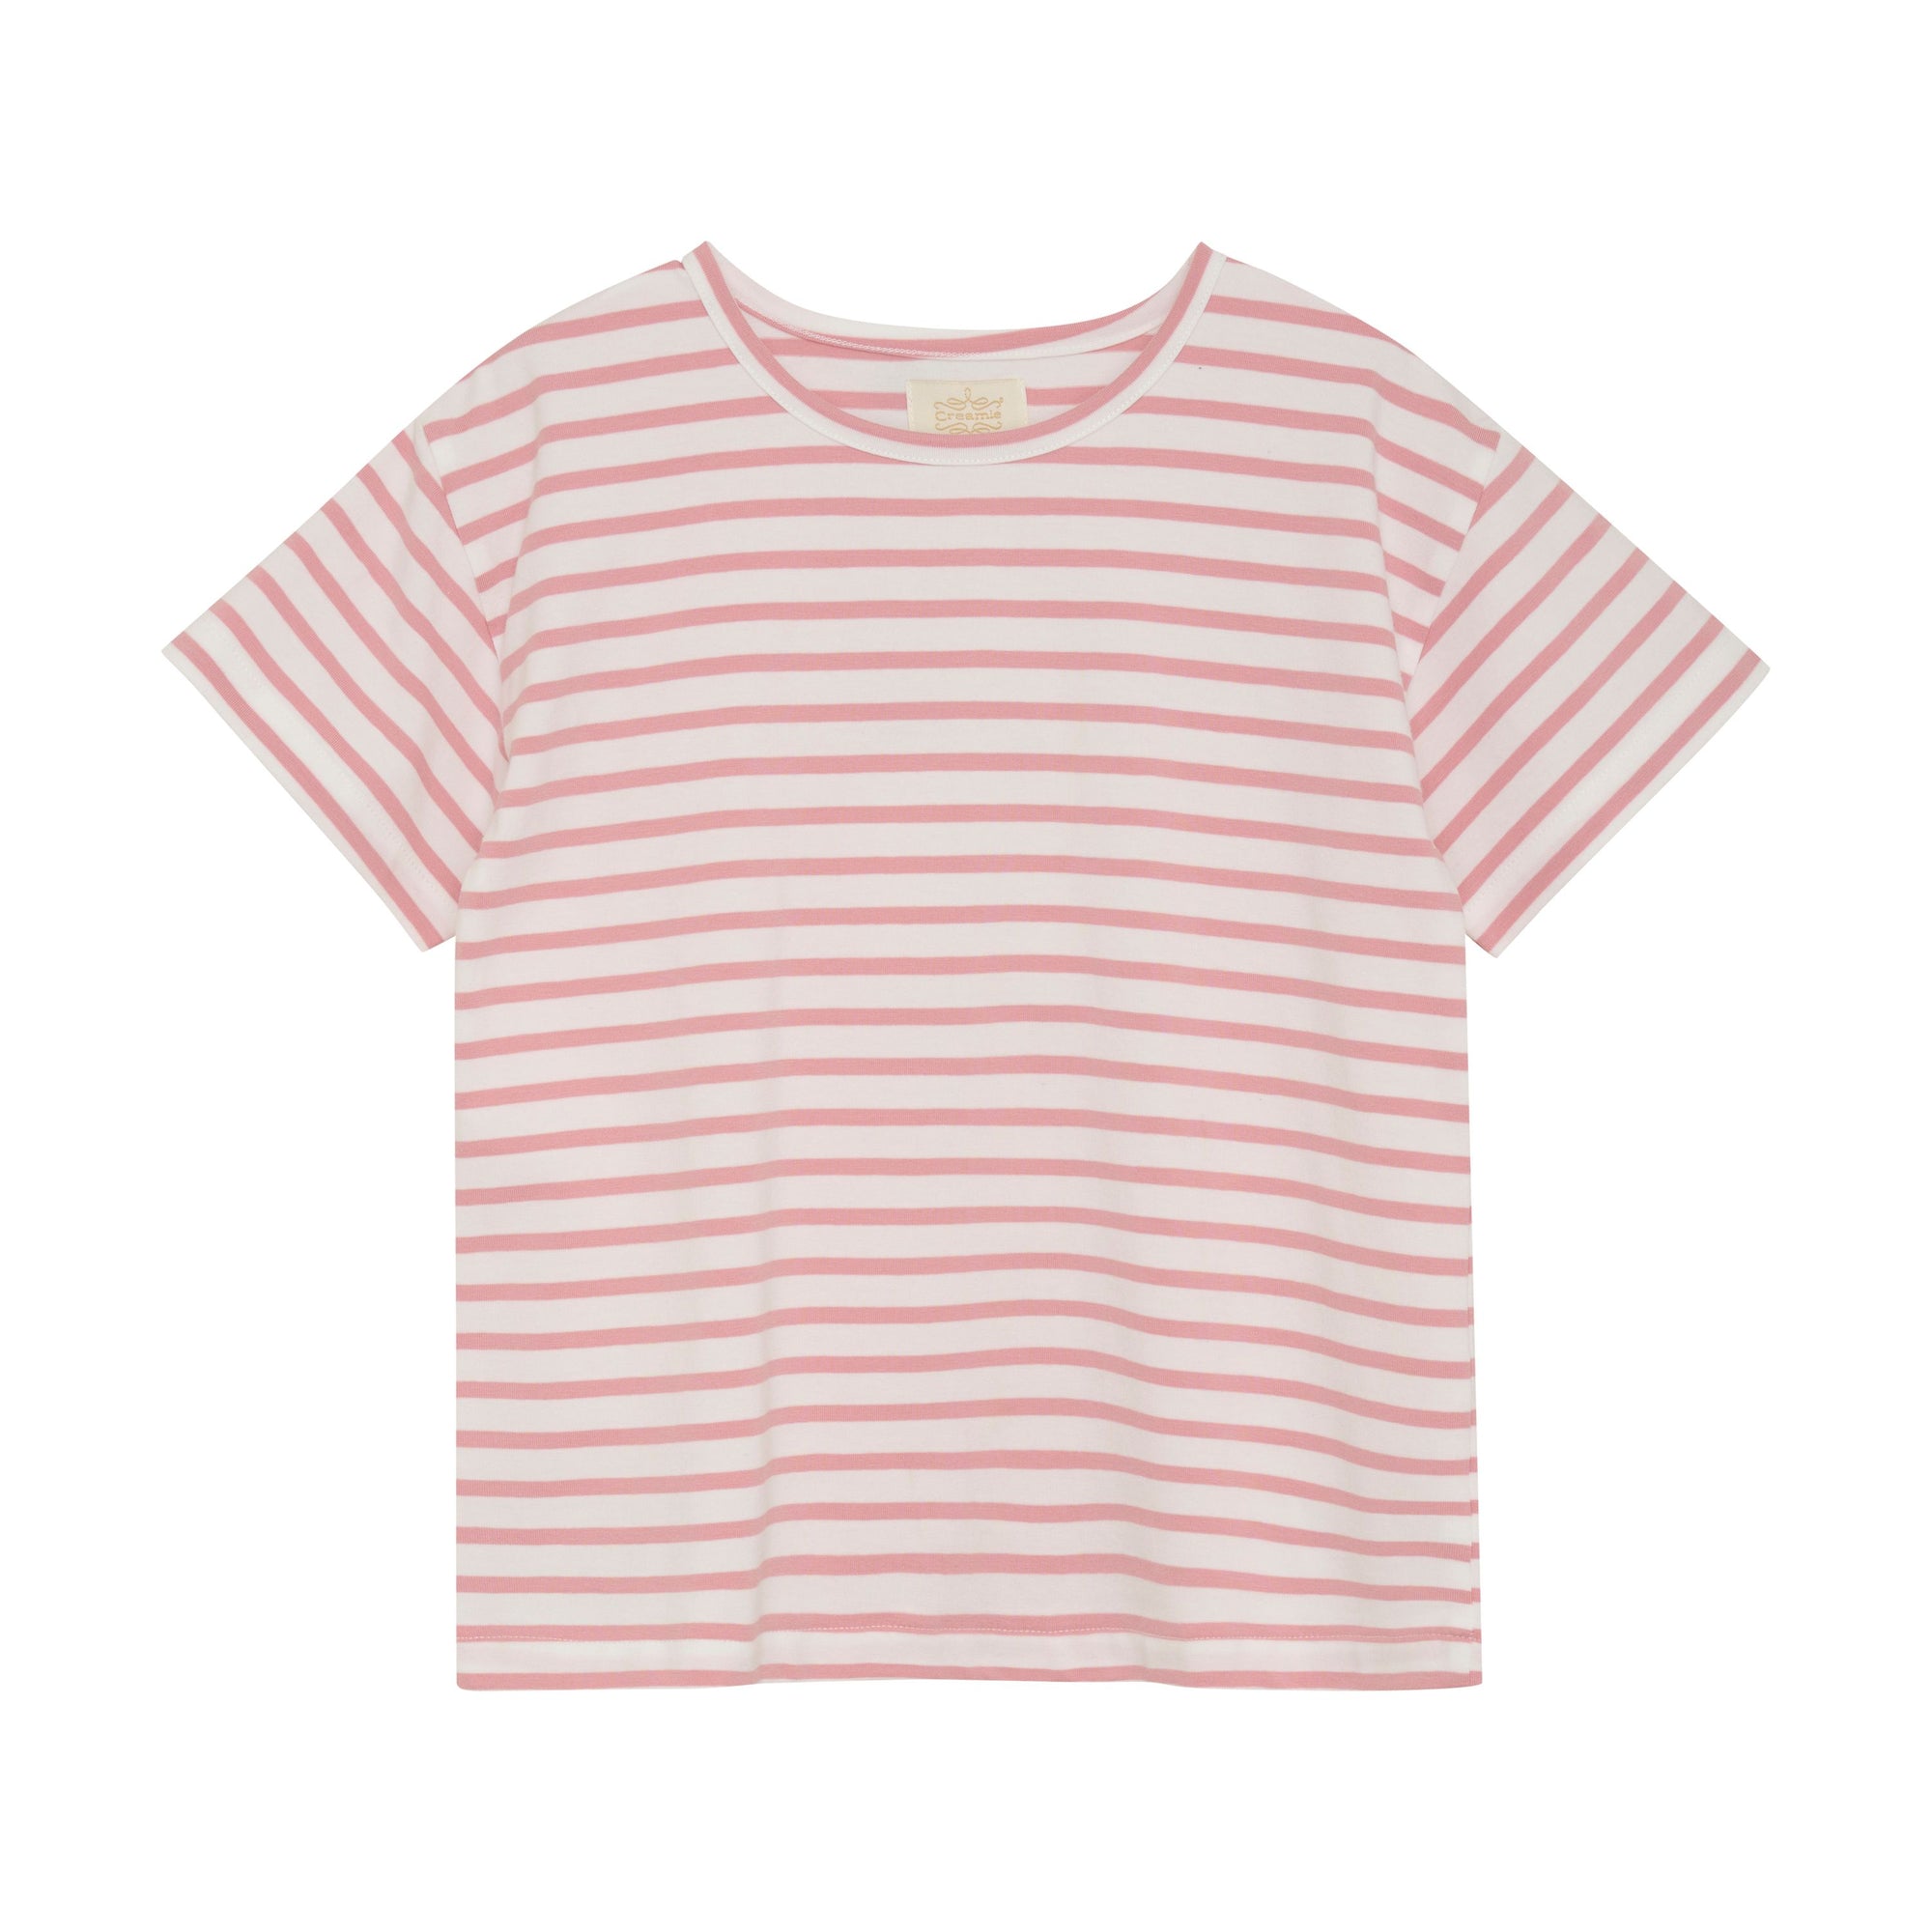 Creamie Girls Striped Short Sleeve Tee  822561-5540